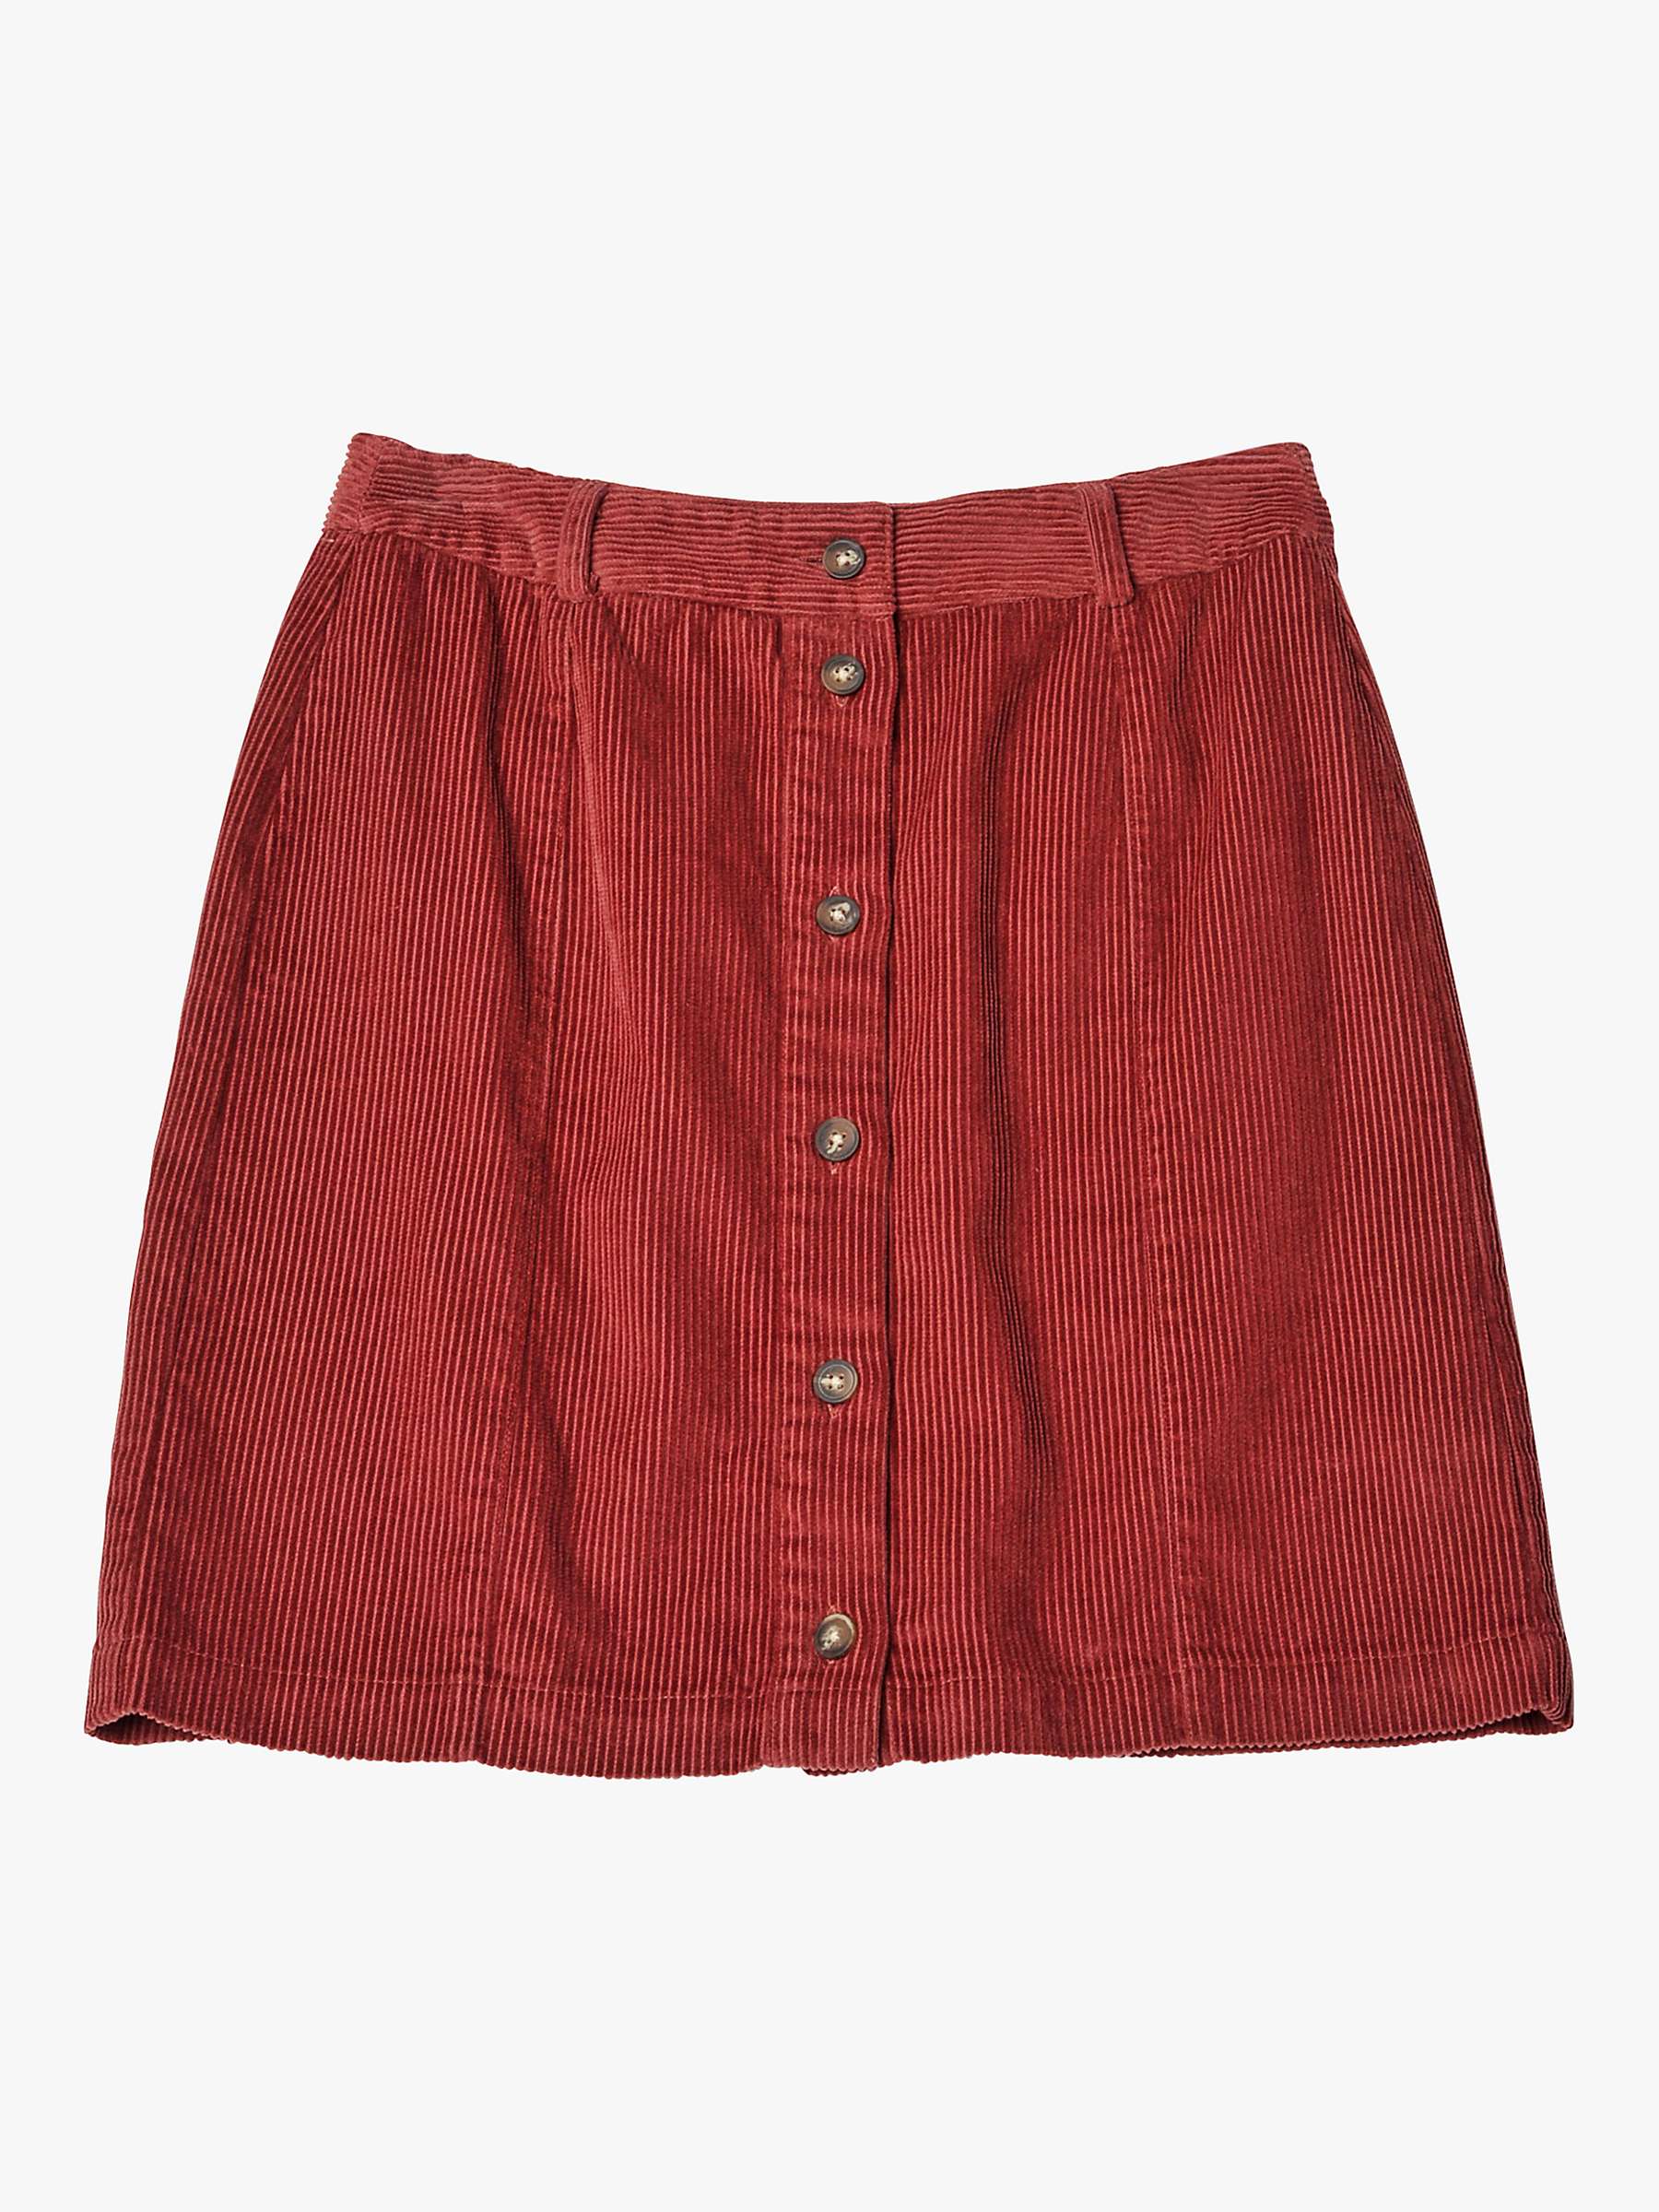 Buy Burgs Penberth Corduroy Skirt Online at johnlewis.com